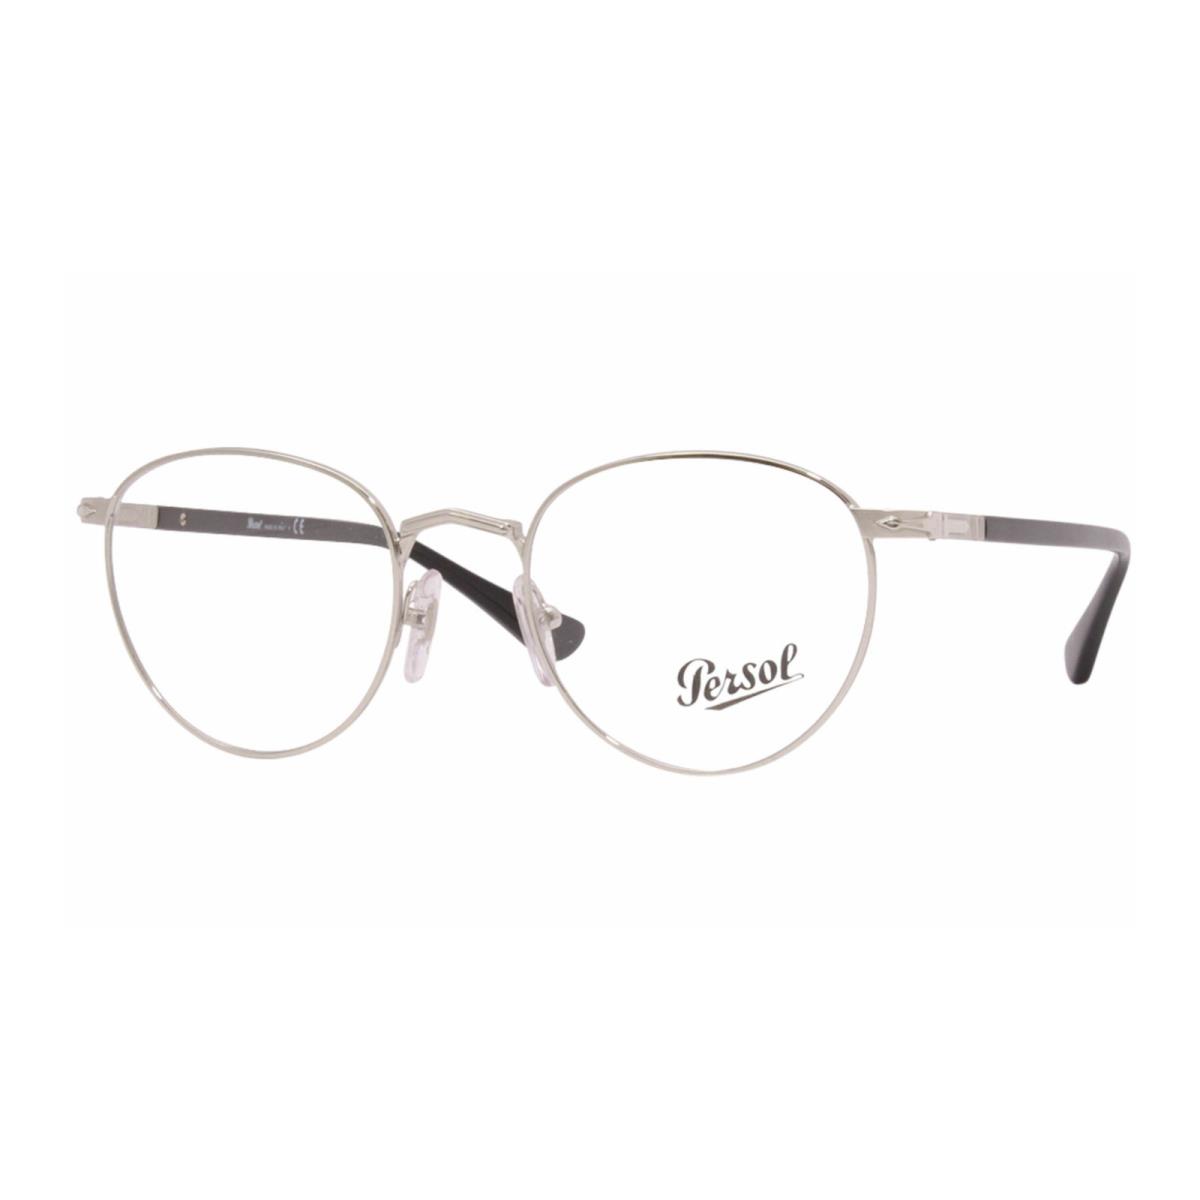 Persol Rx-able Eyeglasses 2478-V 518 50-20 145 Silver Black Round Frames - Frame: Silver, Lens: